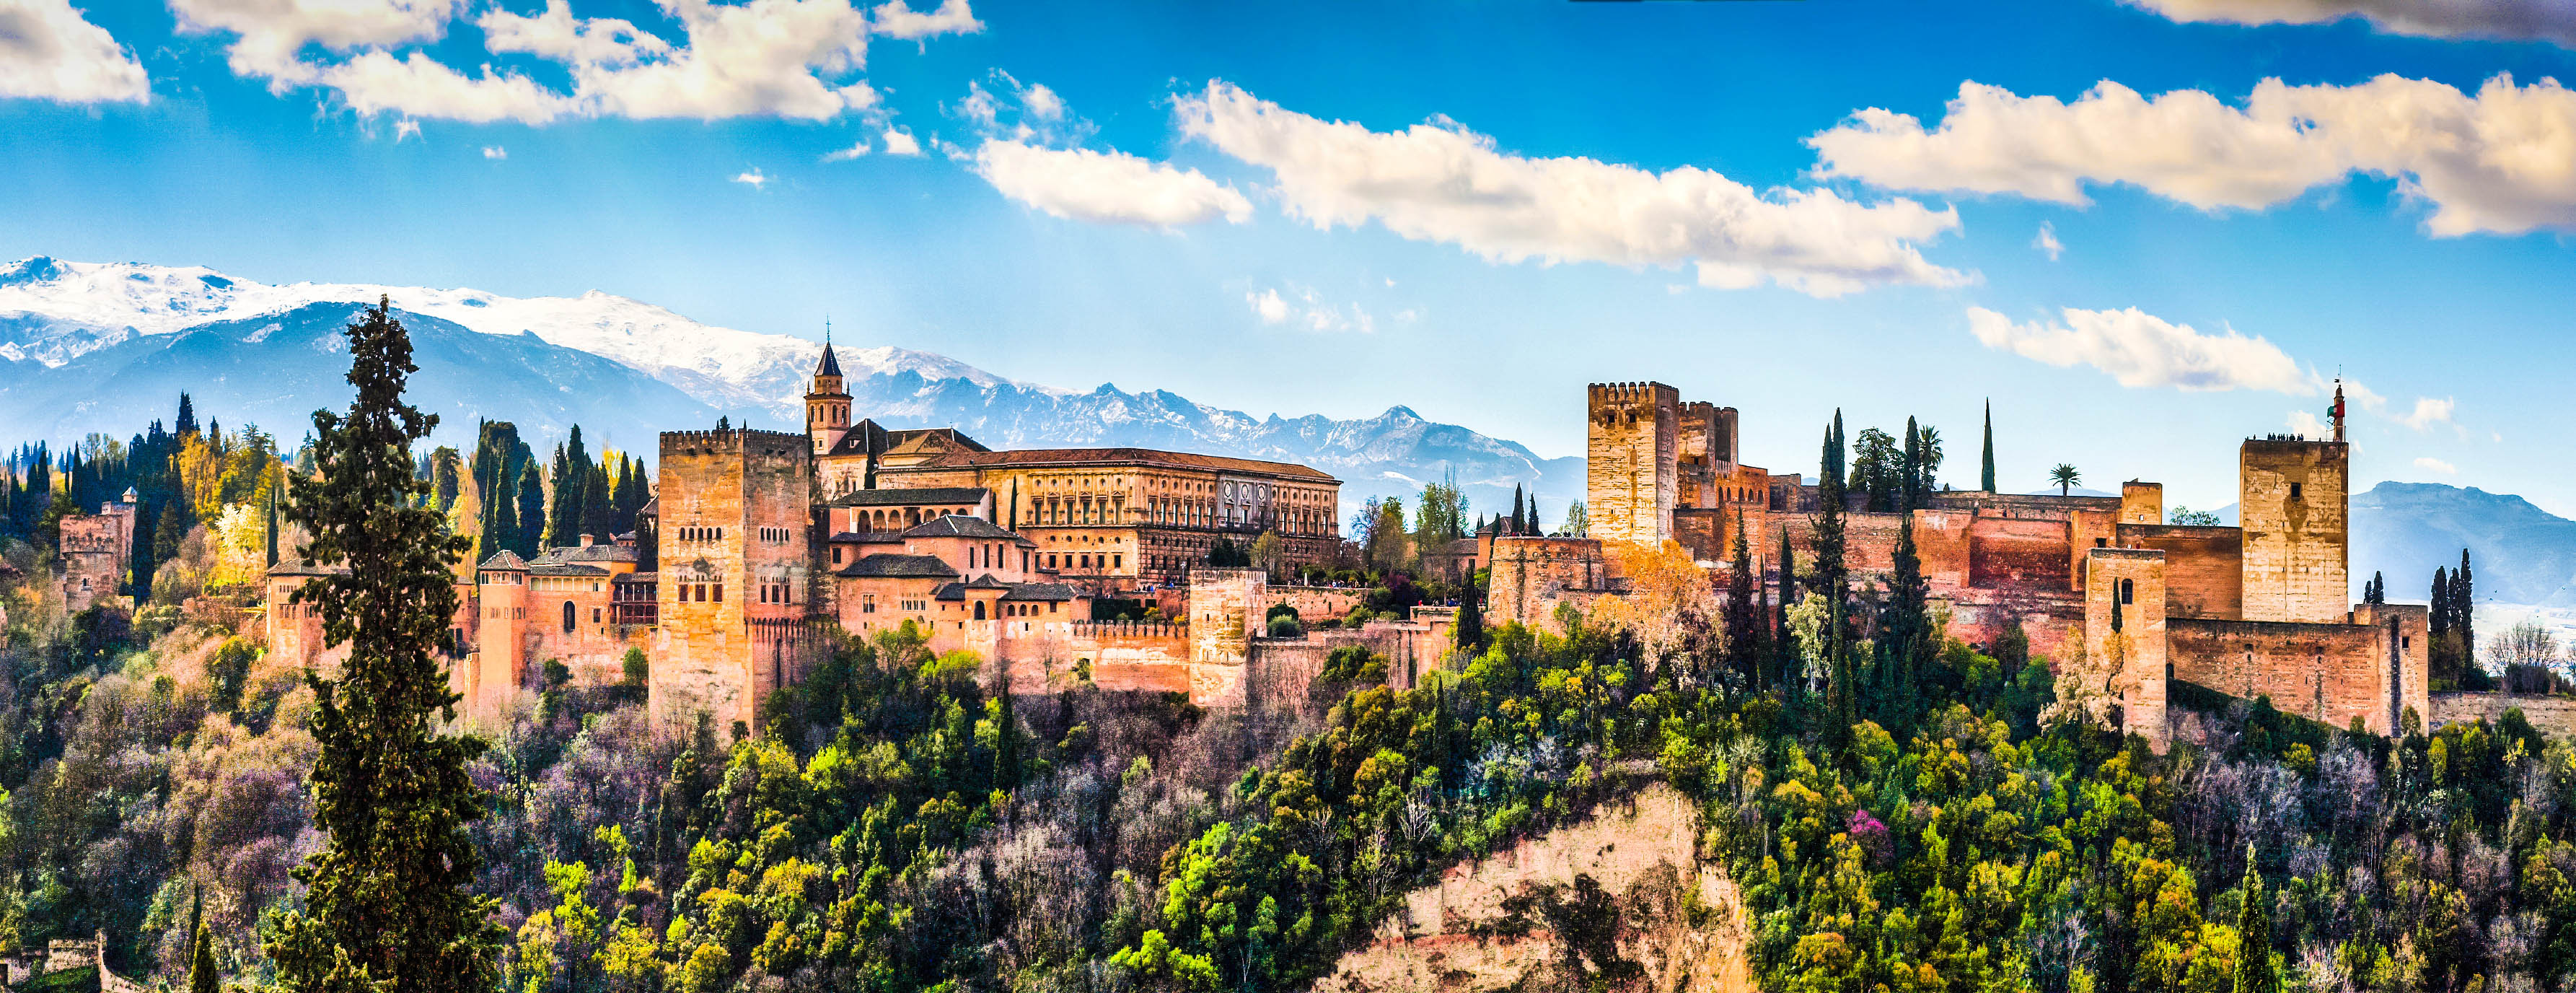 Alhambra-de-Granada-iStock_000060683950_Large-2.jpg